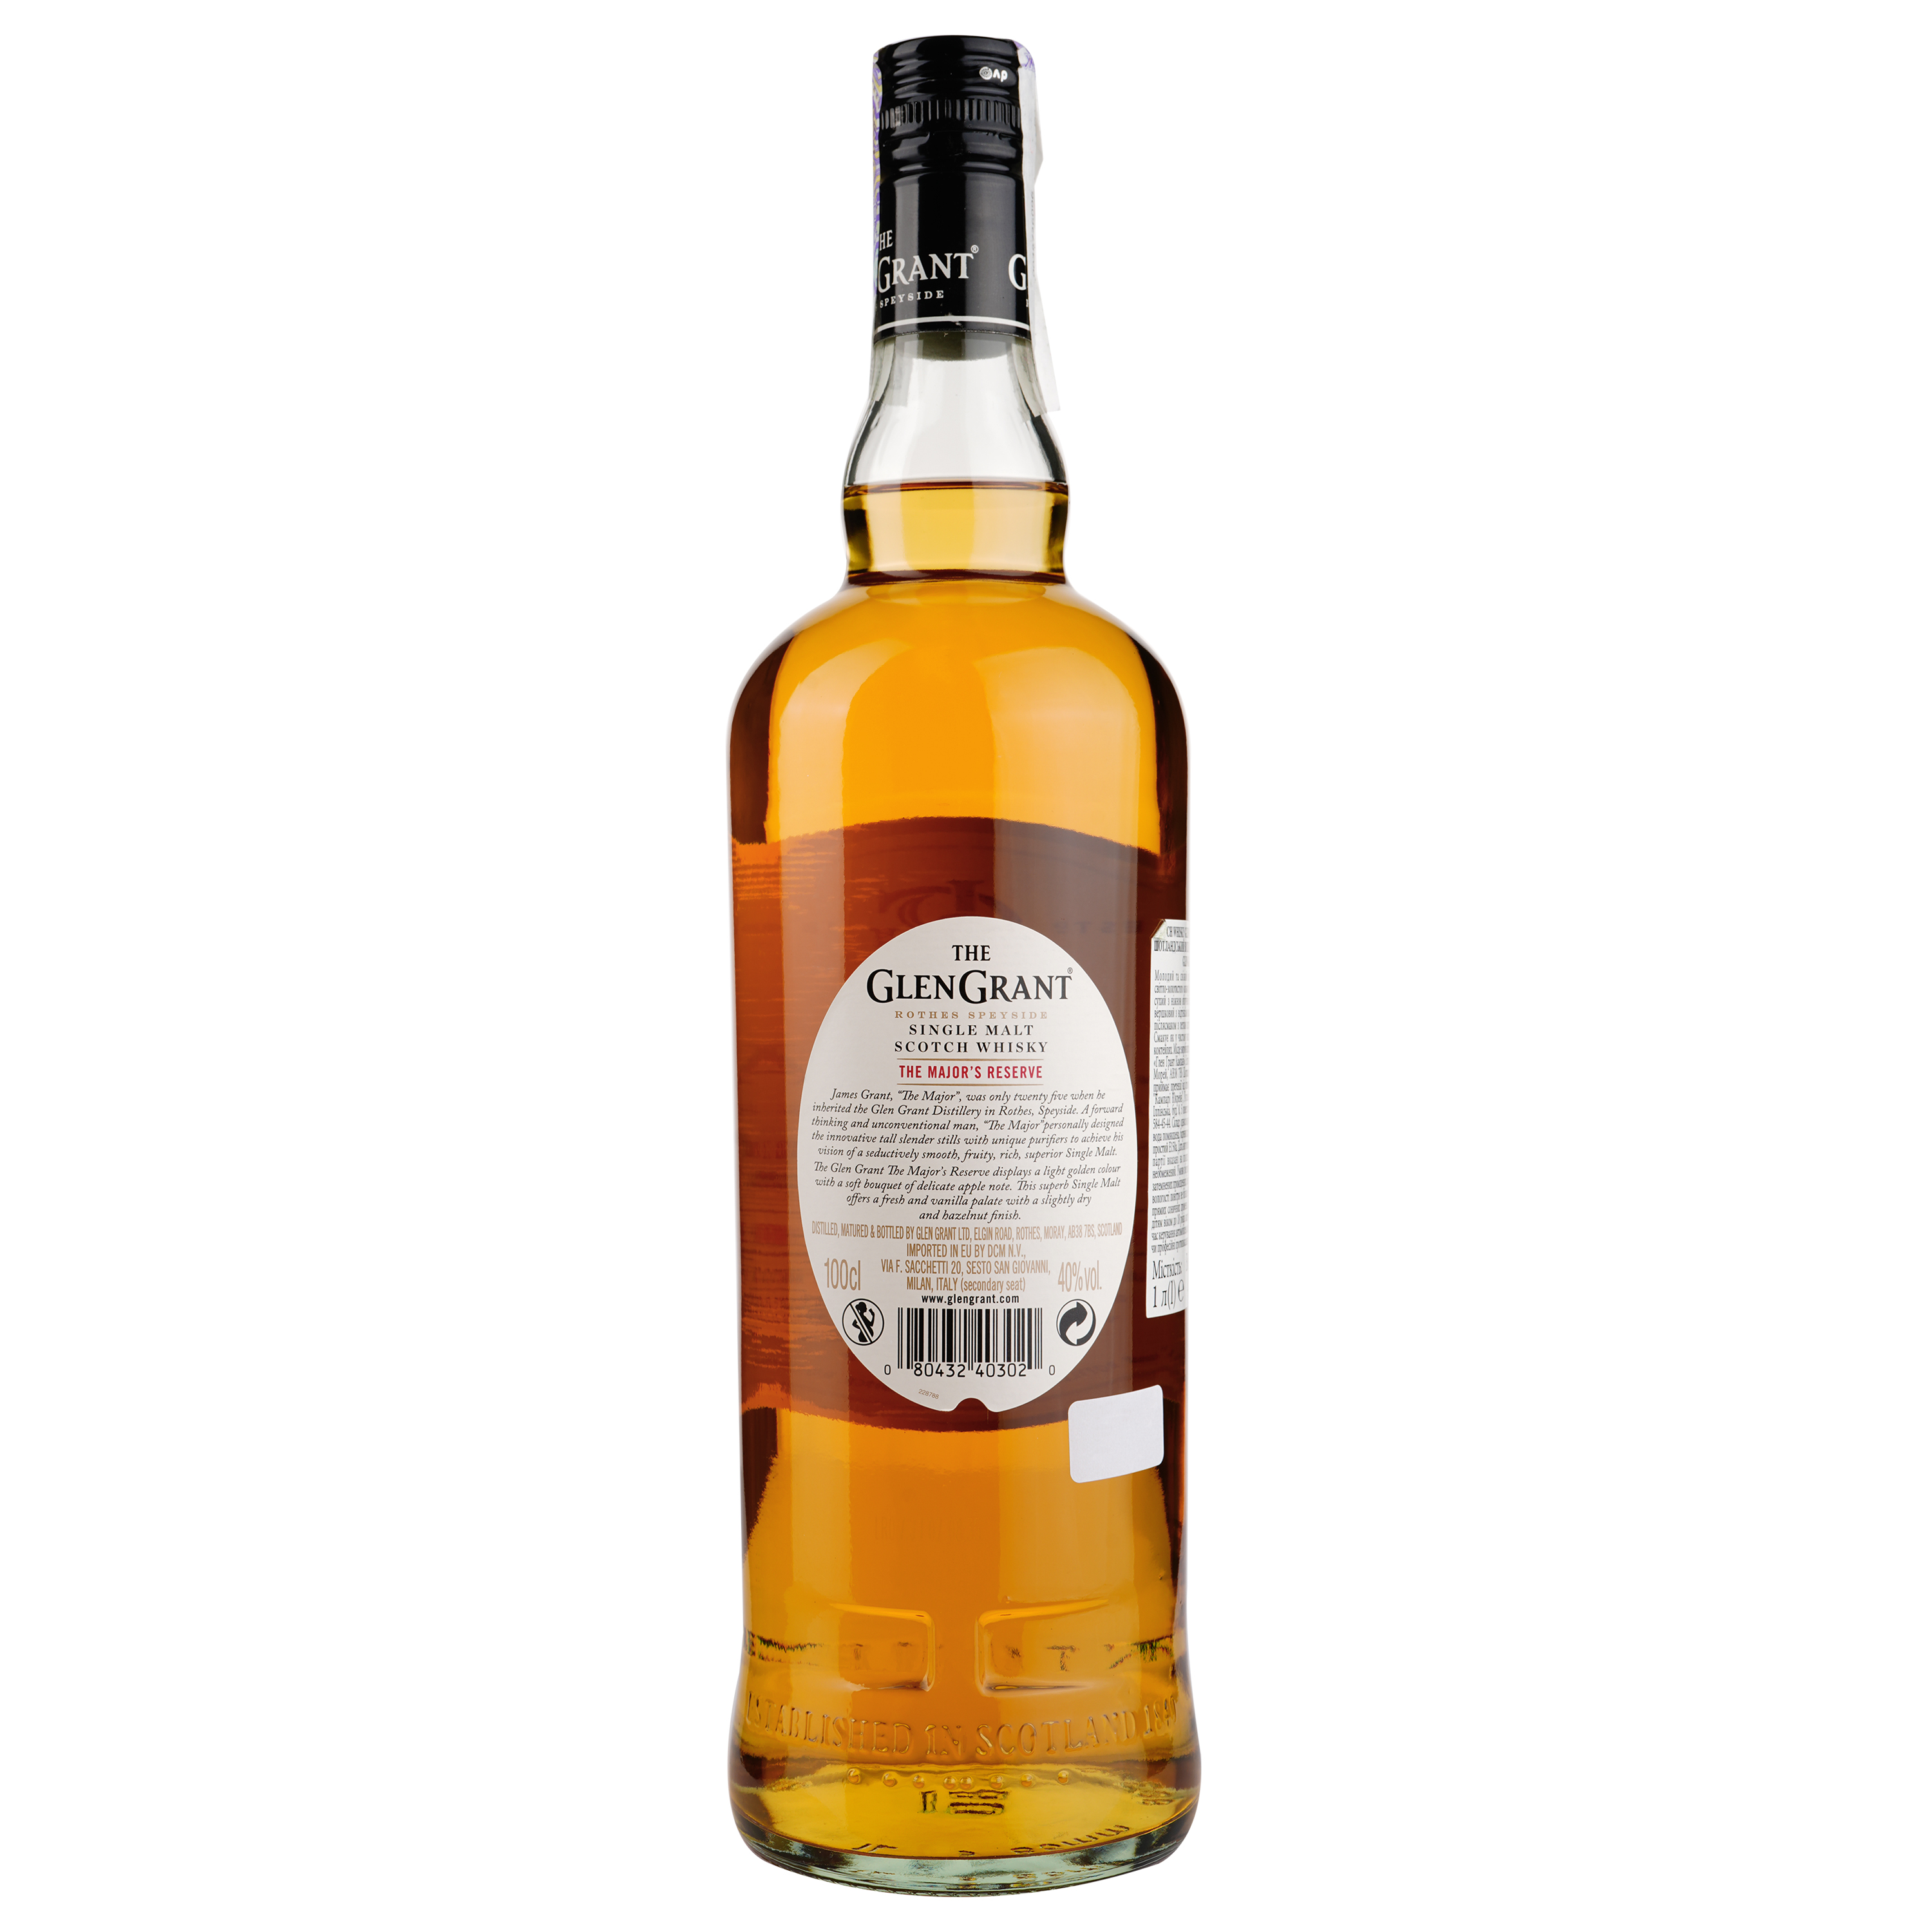 Віскі Glen Grant the Major’s Reserve Single Malt Scotch Whisky 40% 1 л - фото 2